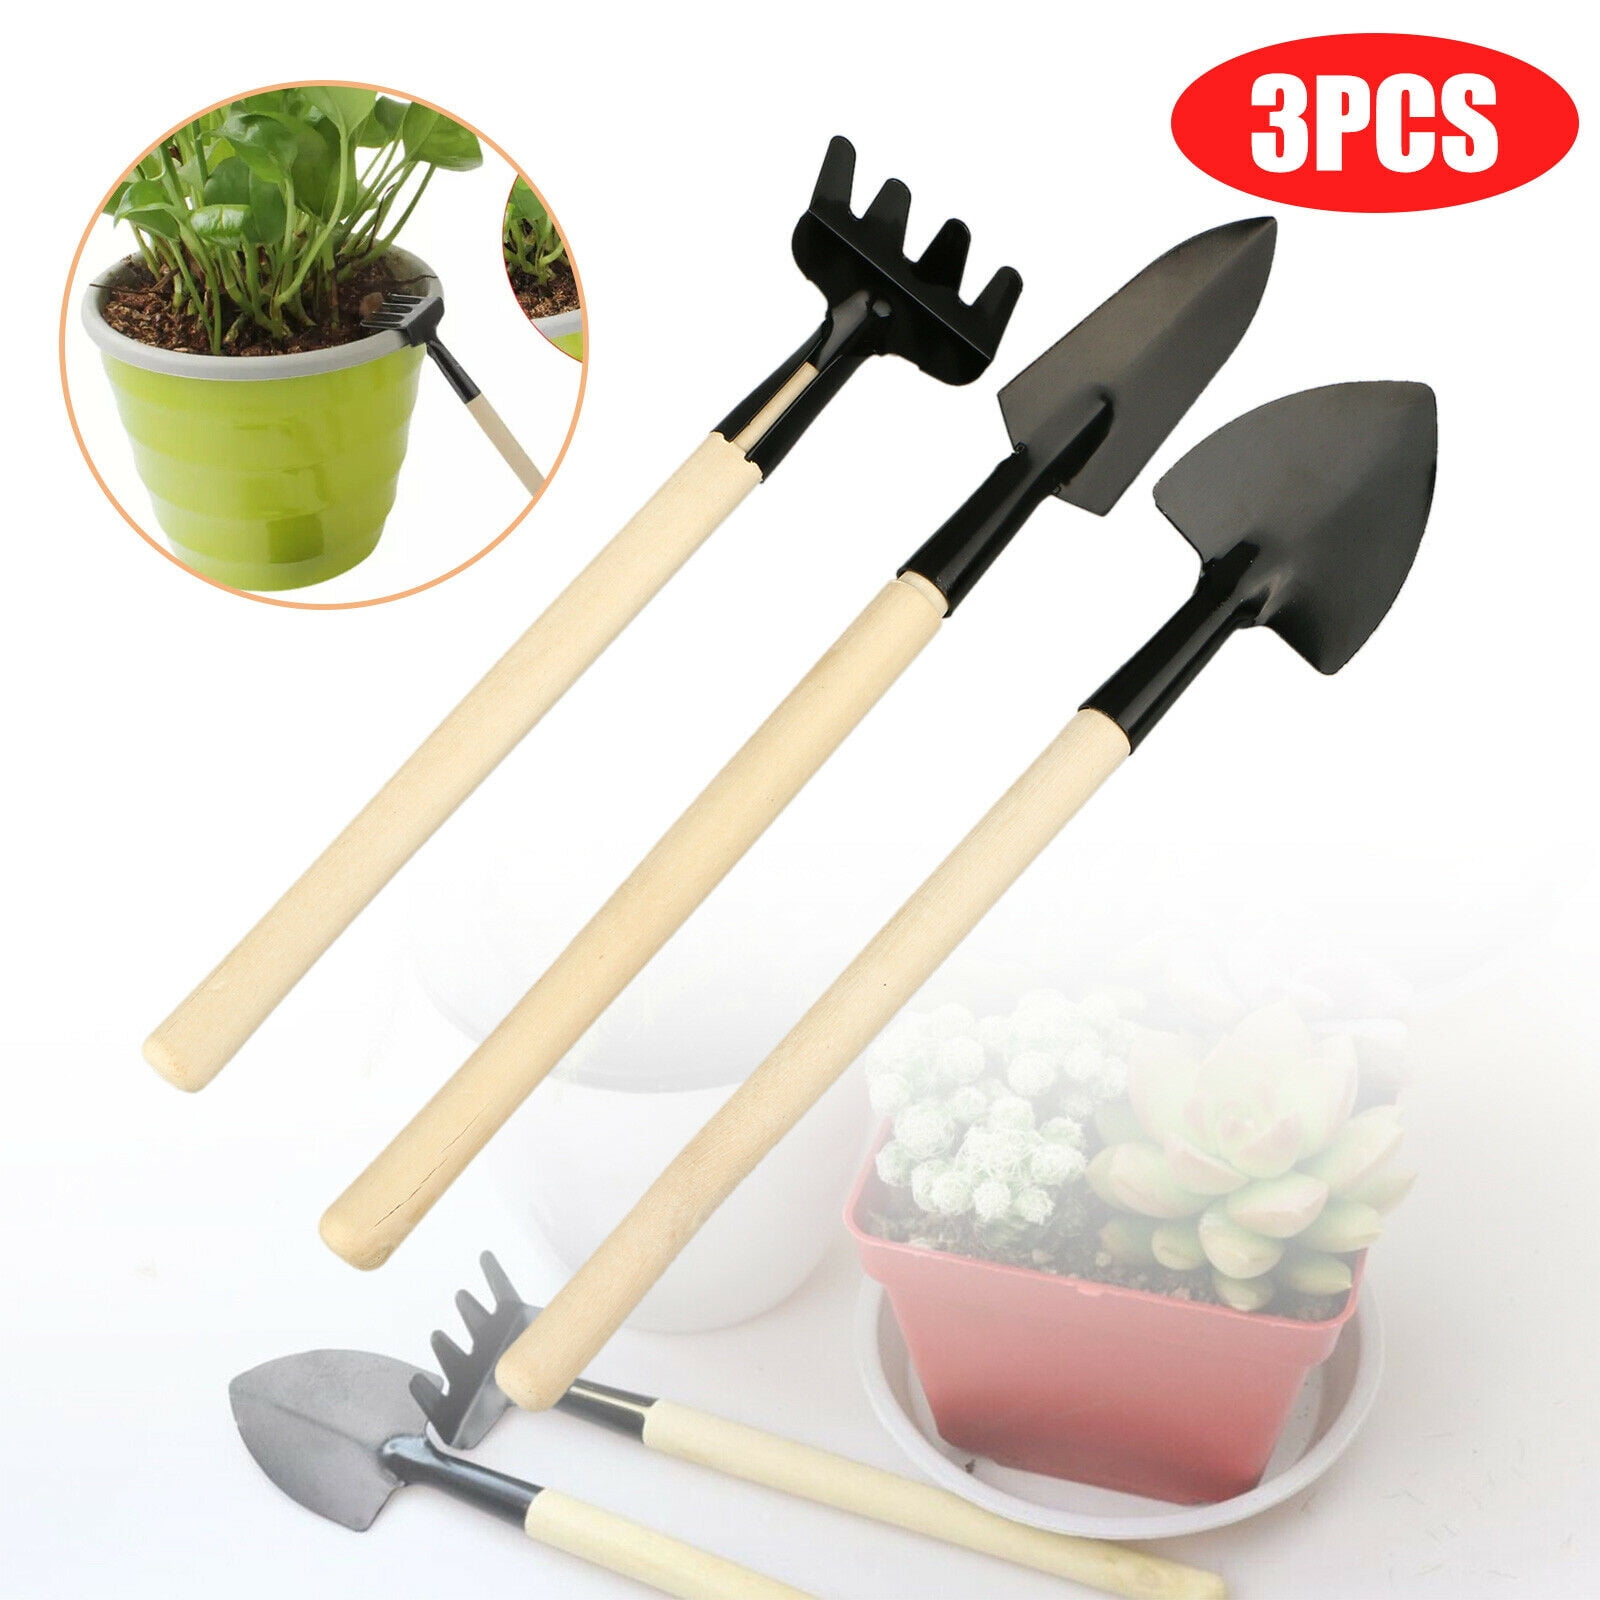 3pcs Mini Garden Tool Set Shovel Rake Spade Wood Handle Metal Head Kids Tools RM 